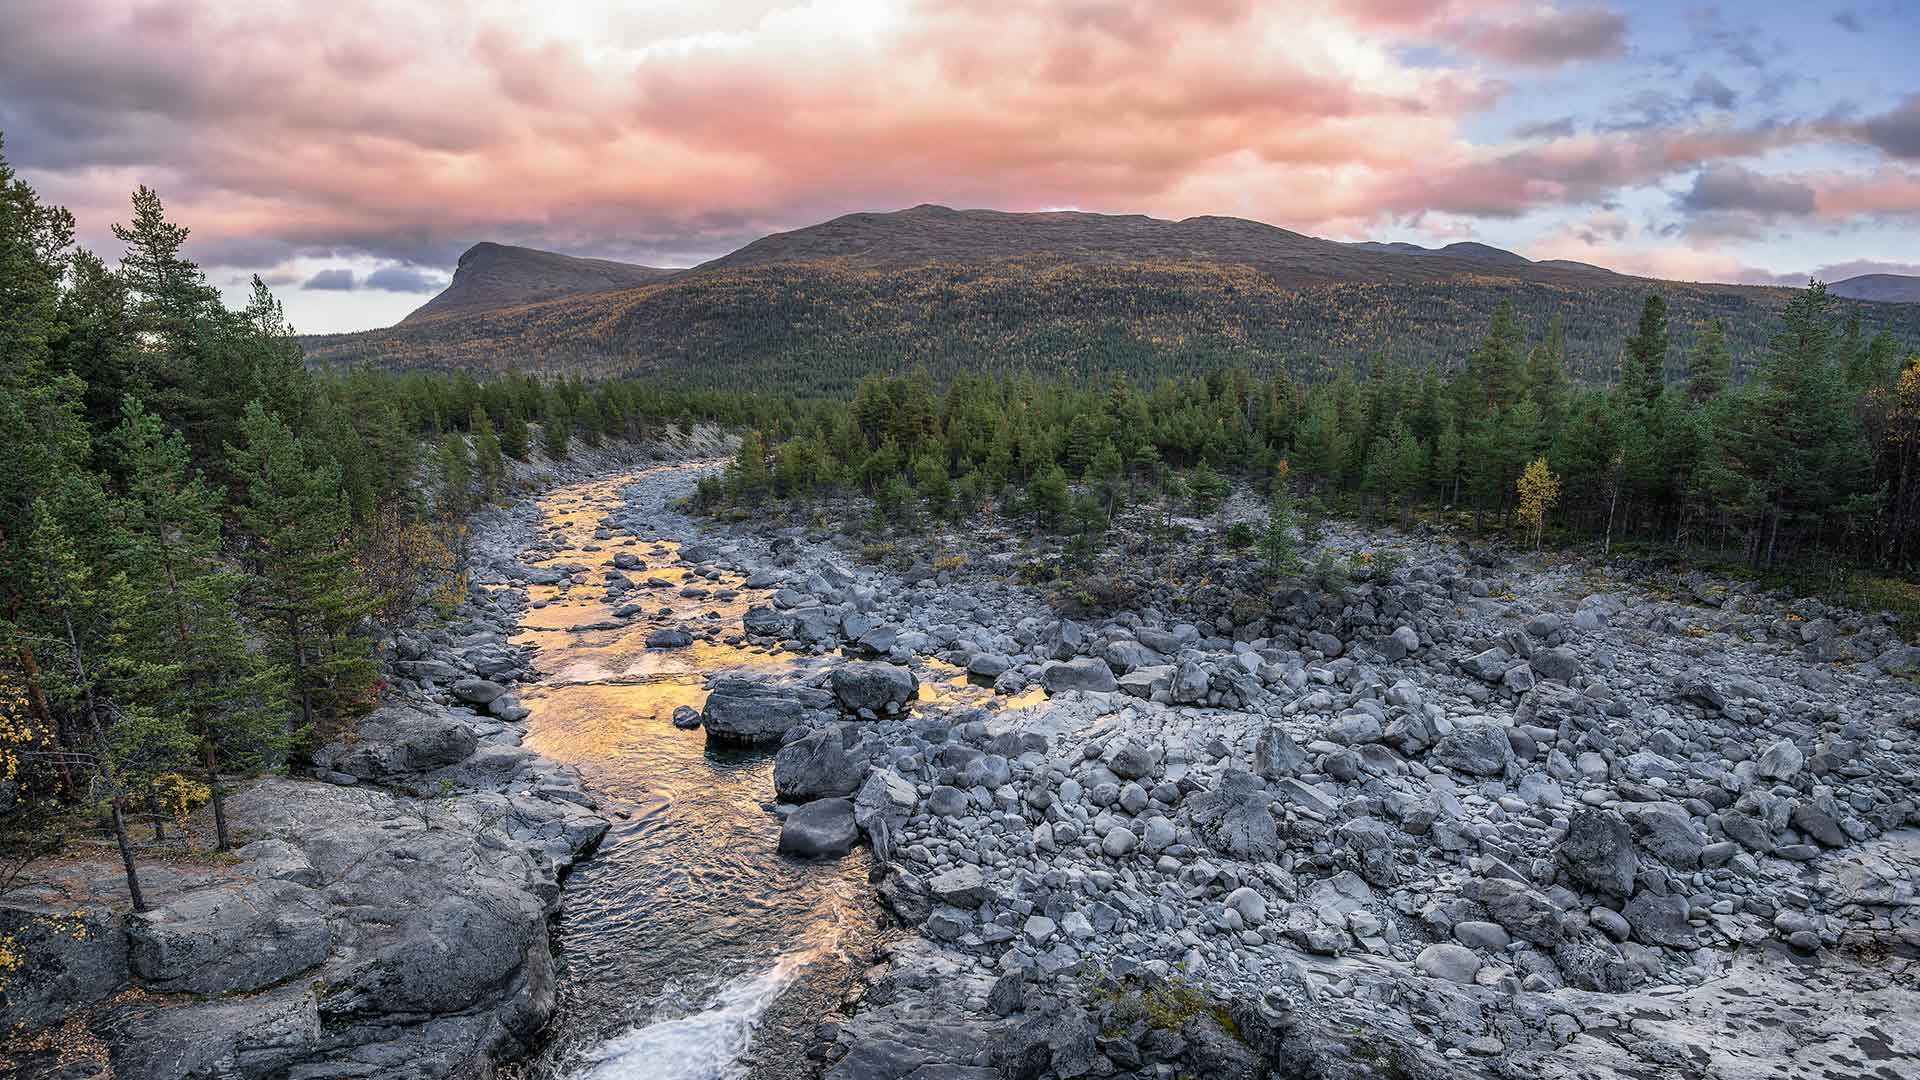 Sjoa River in Jotunheim National Park in Norway